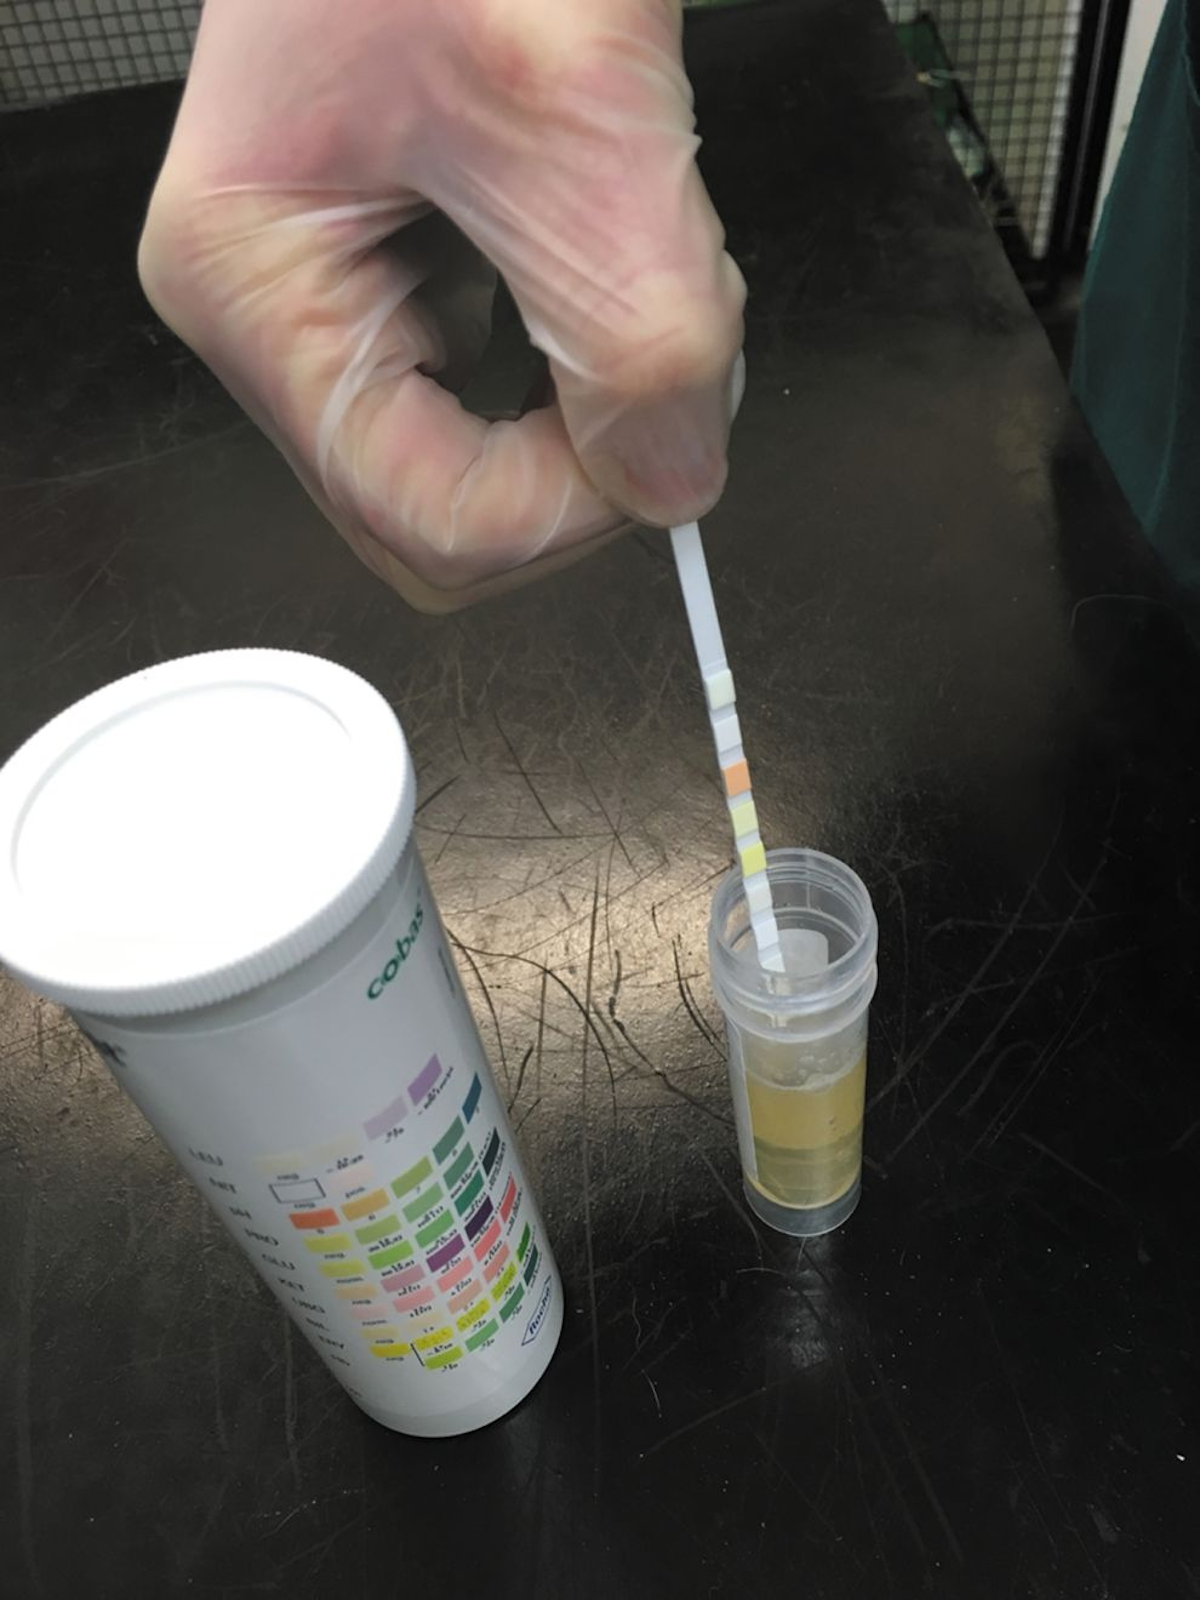 Urinary dipsticks are inexpensive and offer a simple qualitative and semi-quantitative test.